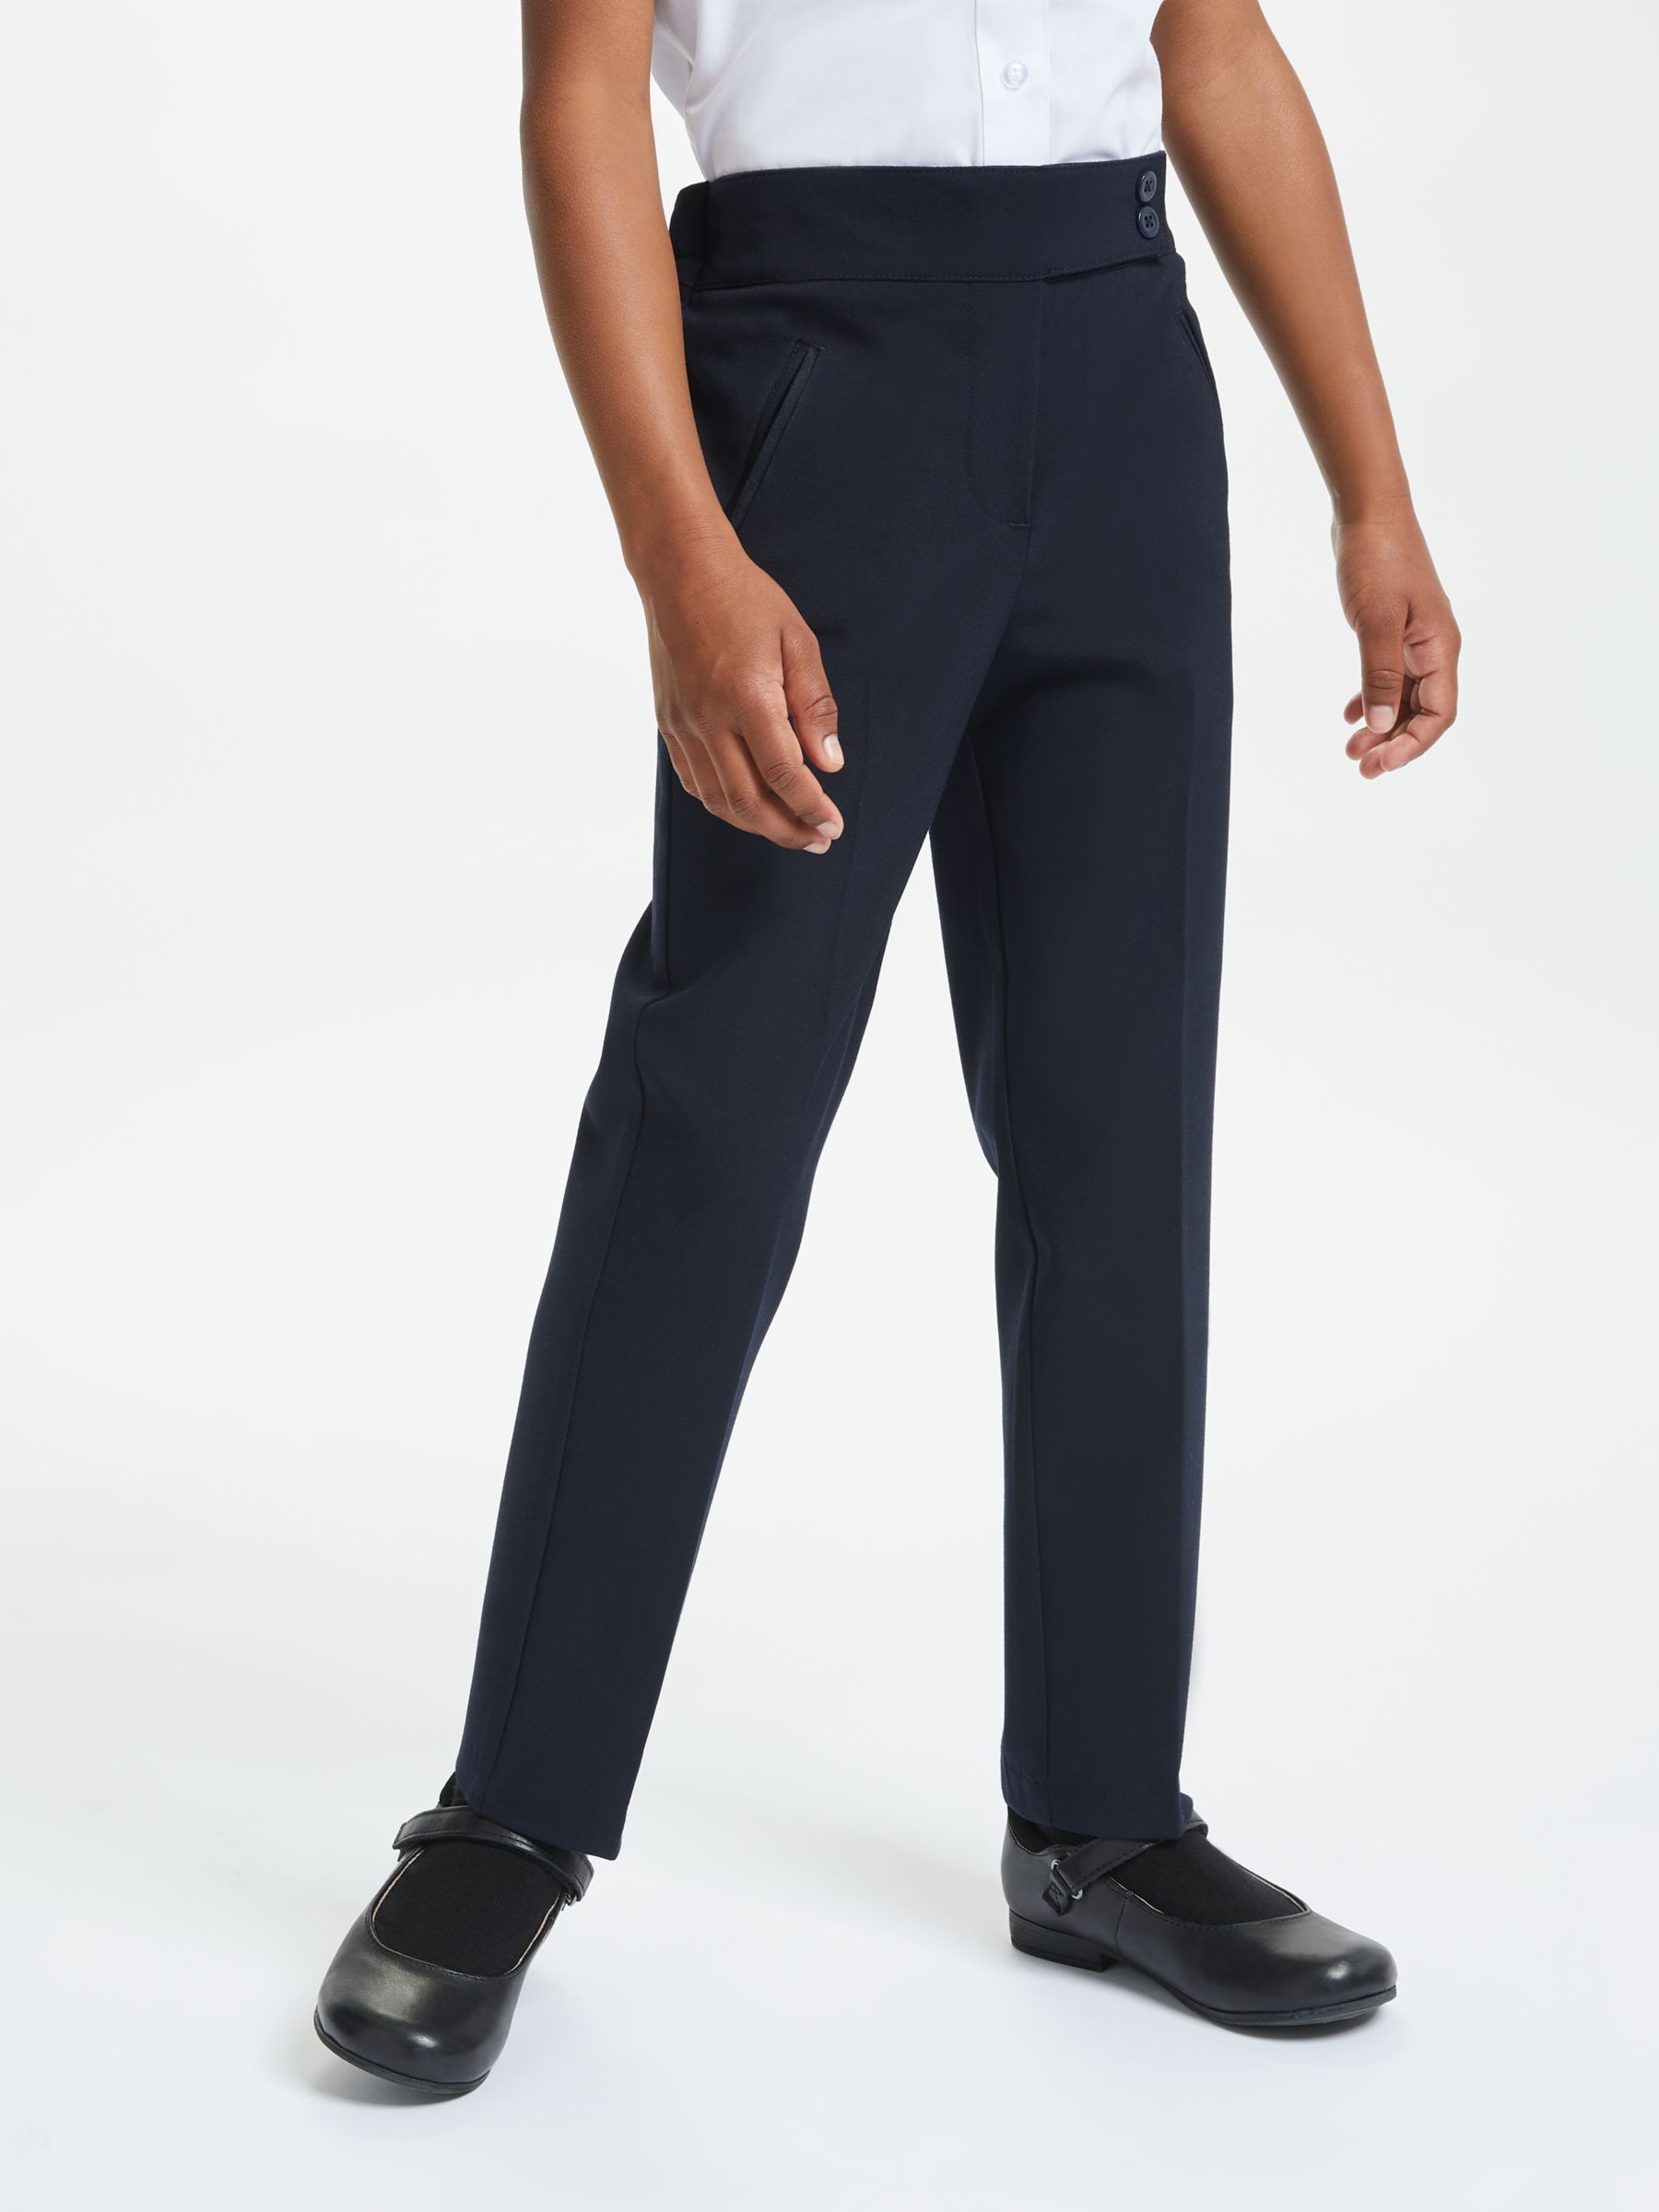 John Lewis & Partners Girls' Regular Fit School Trousers, Navy